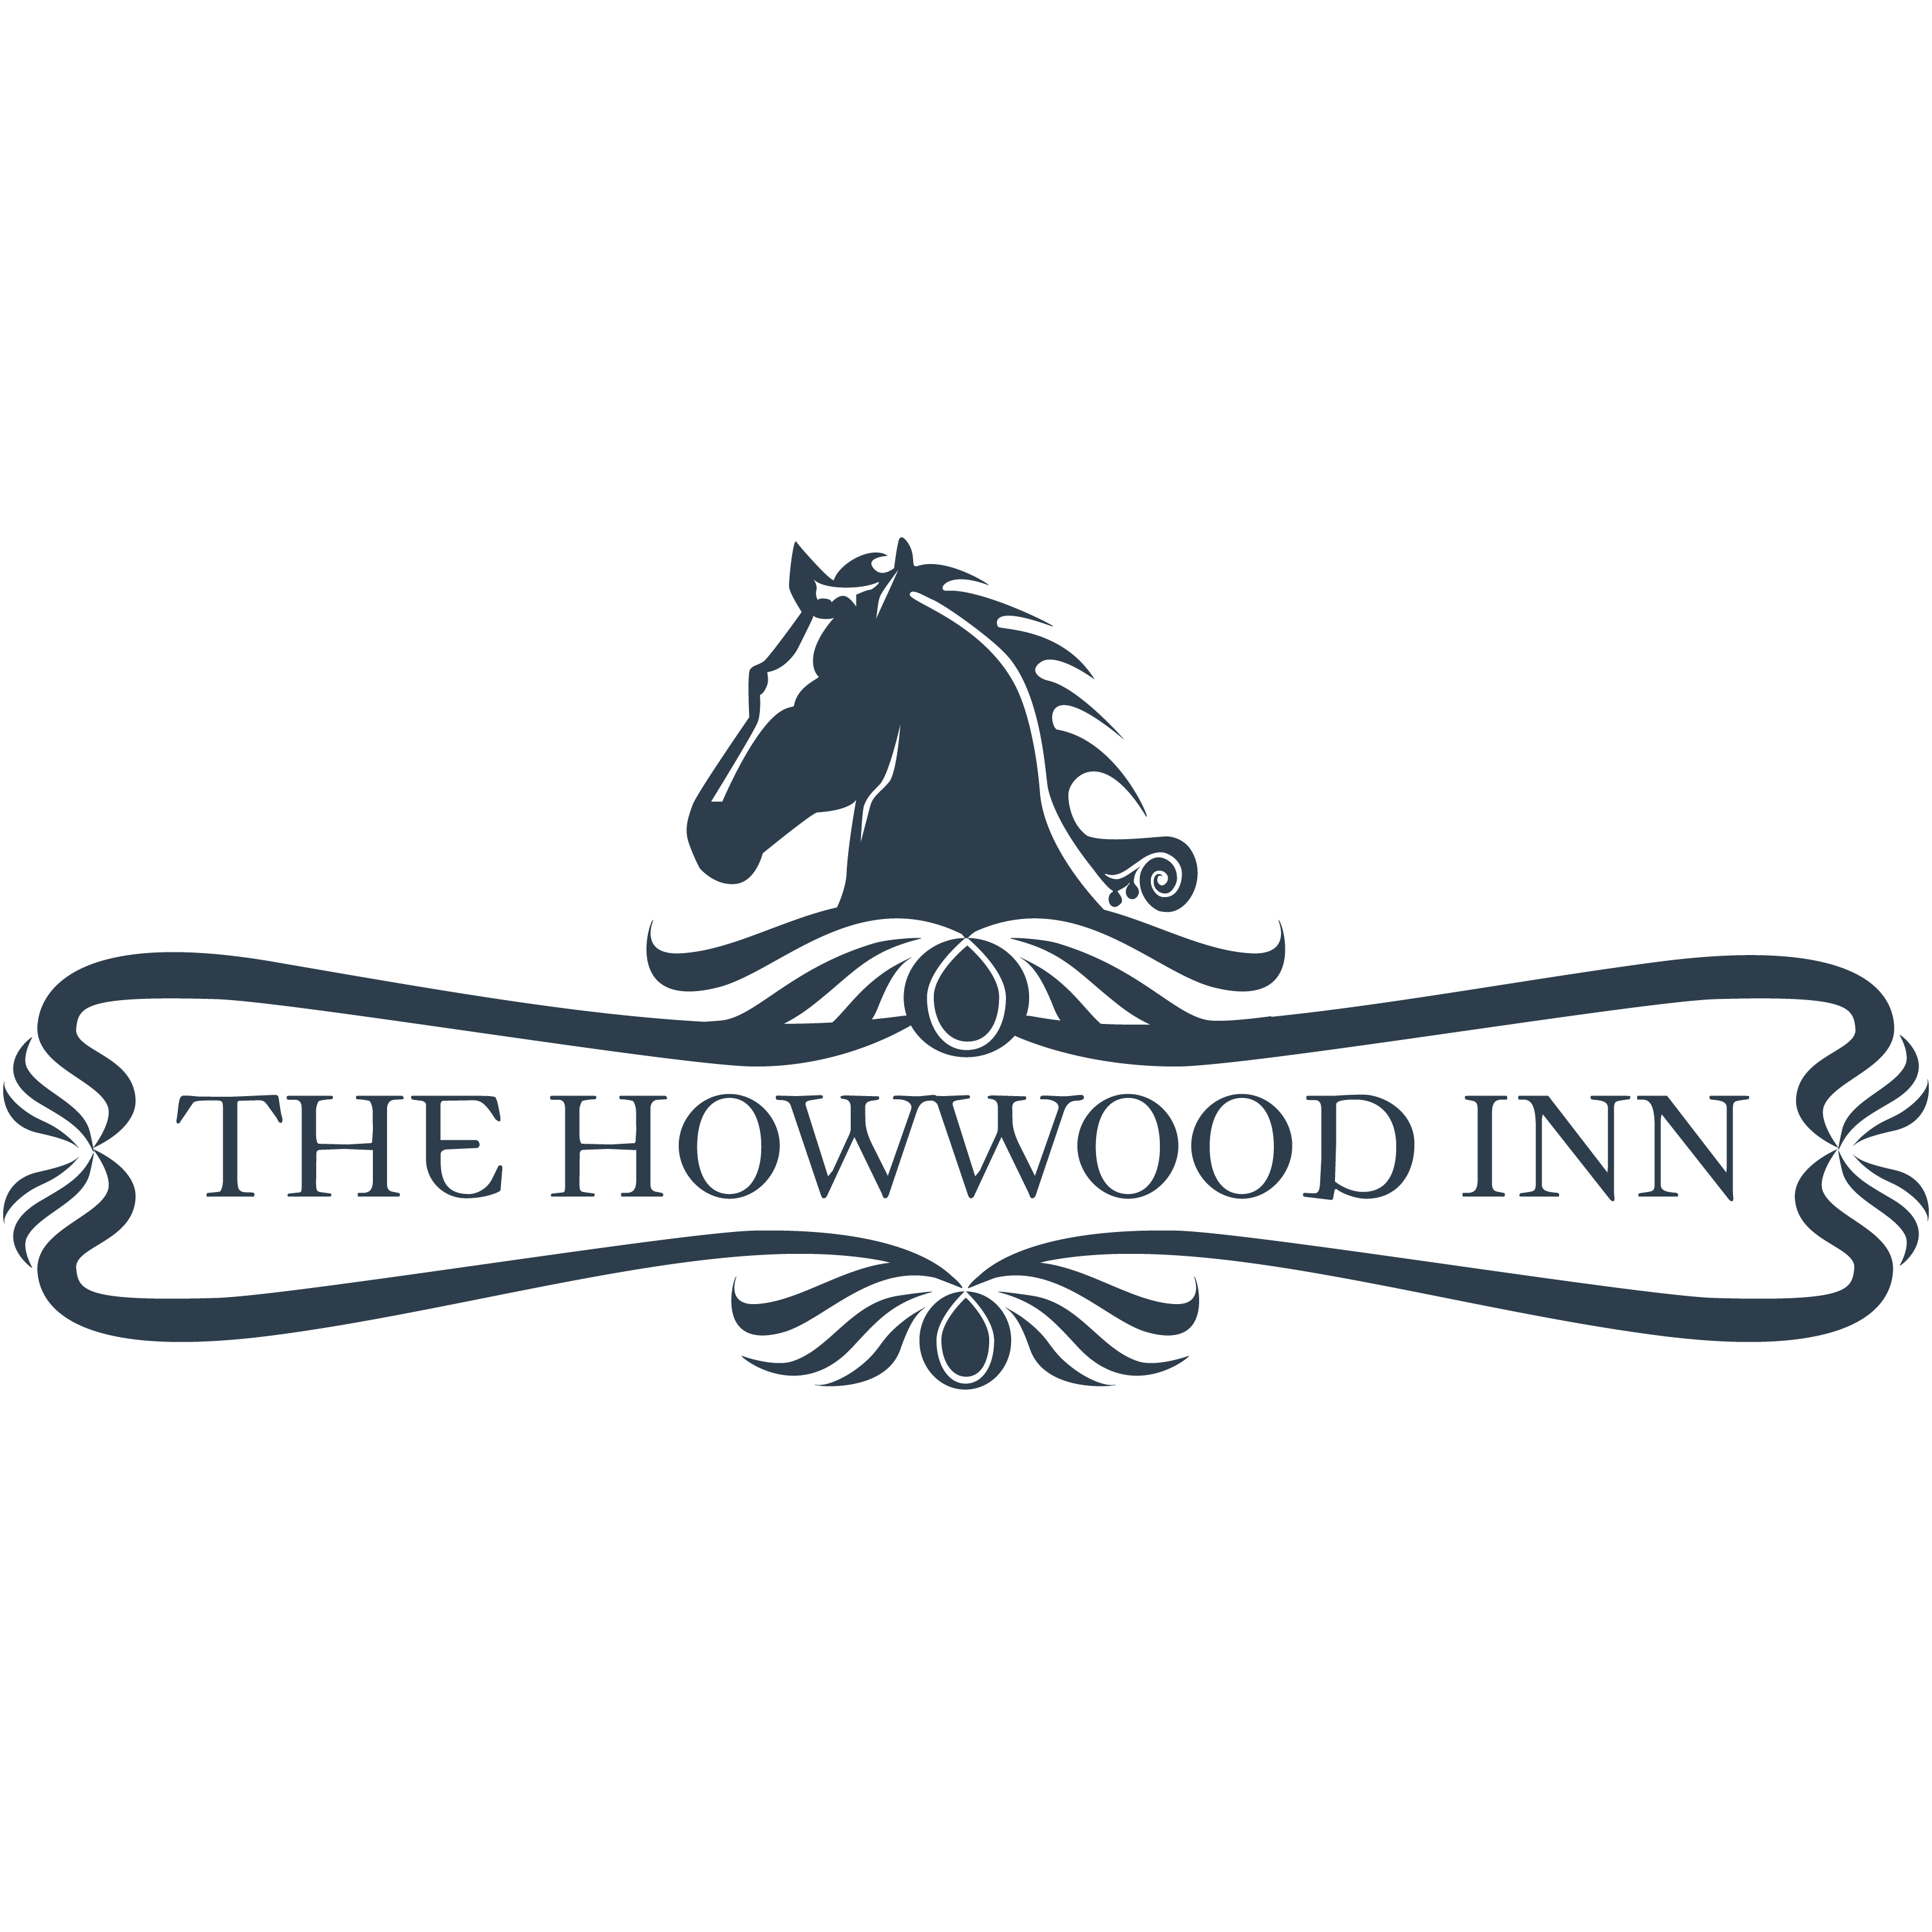 The Howwood Inn